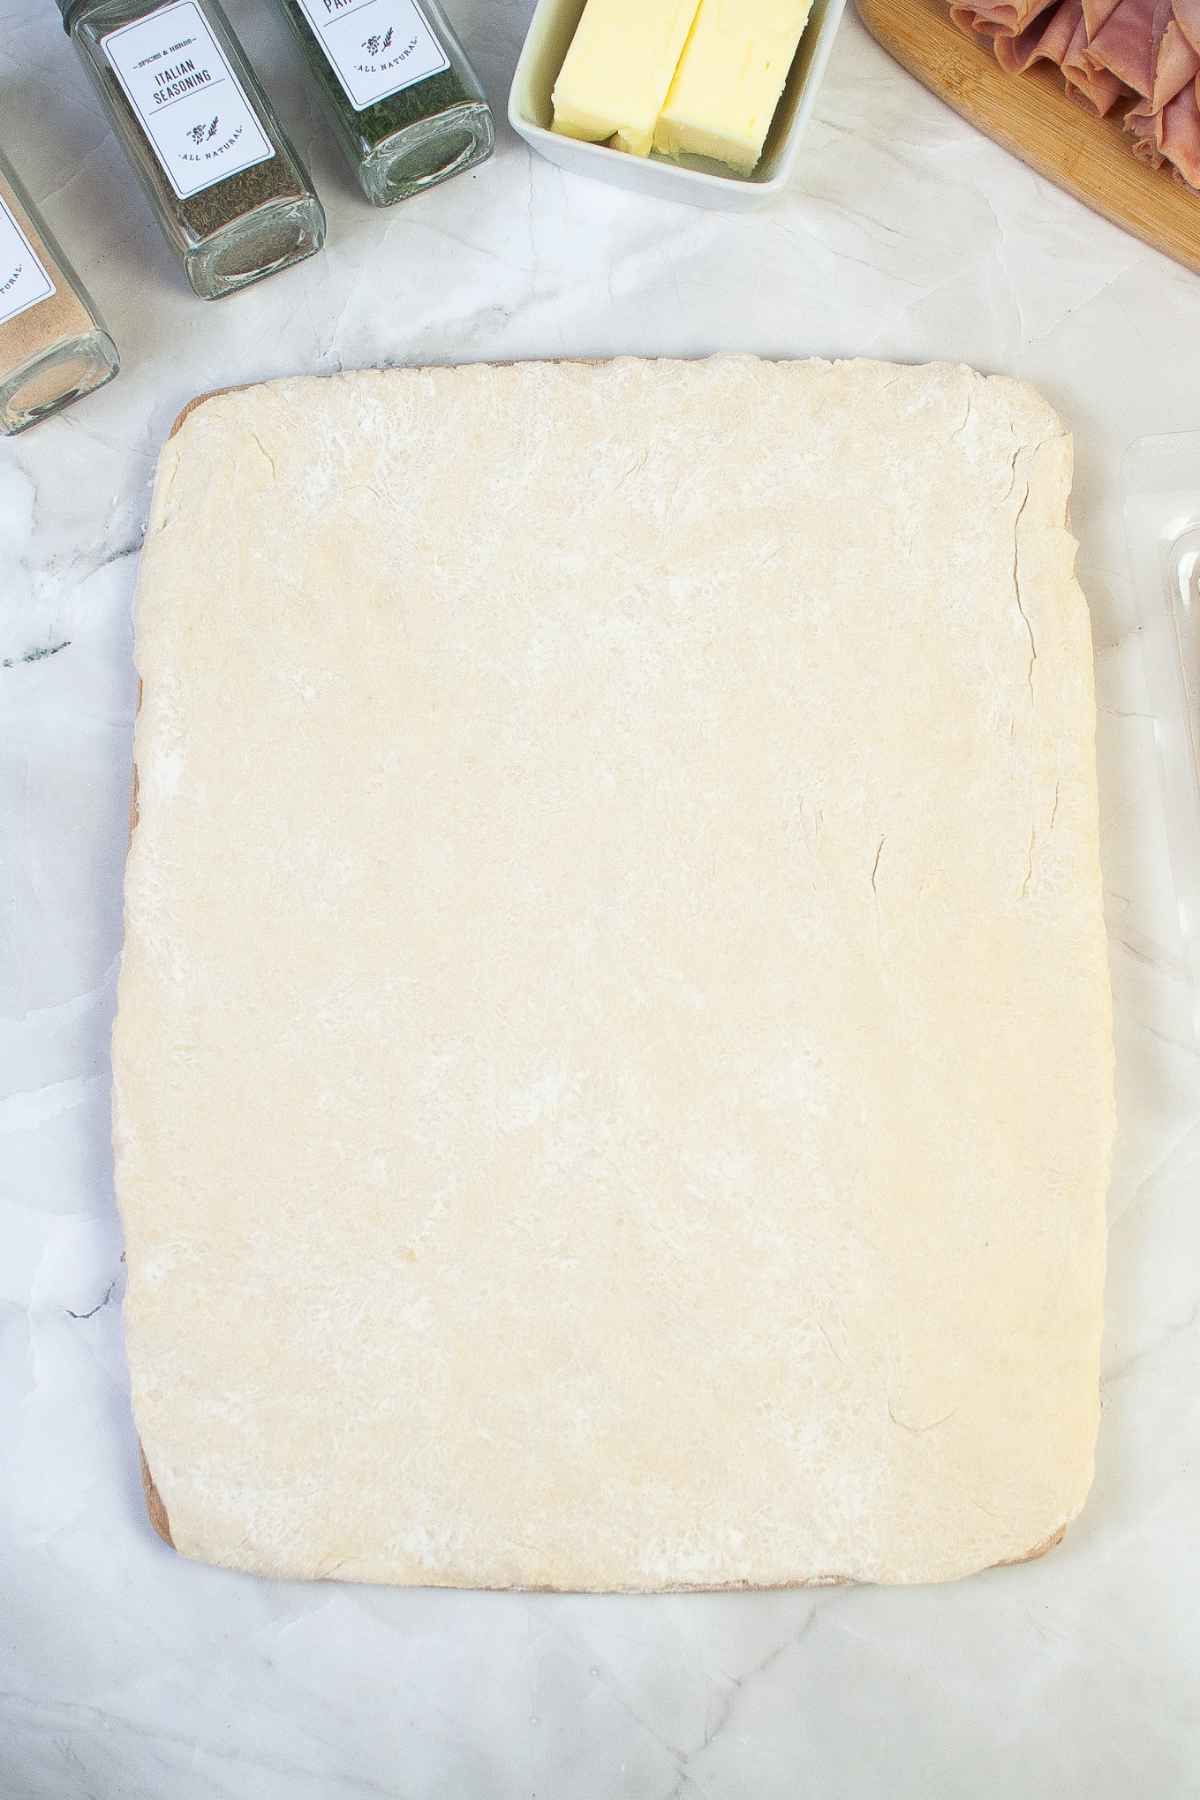 Dough rectangle on hard surface.